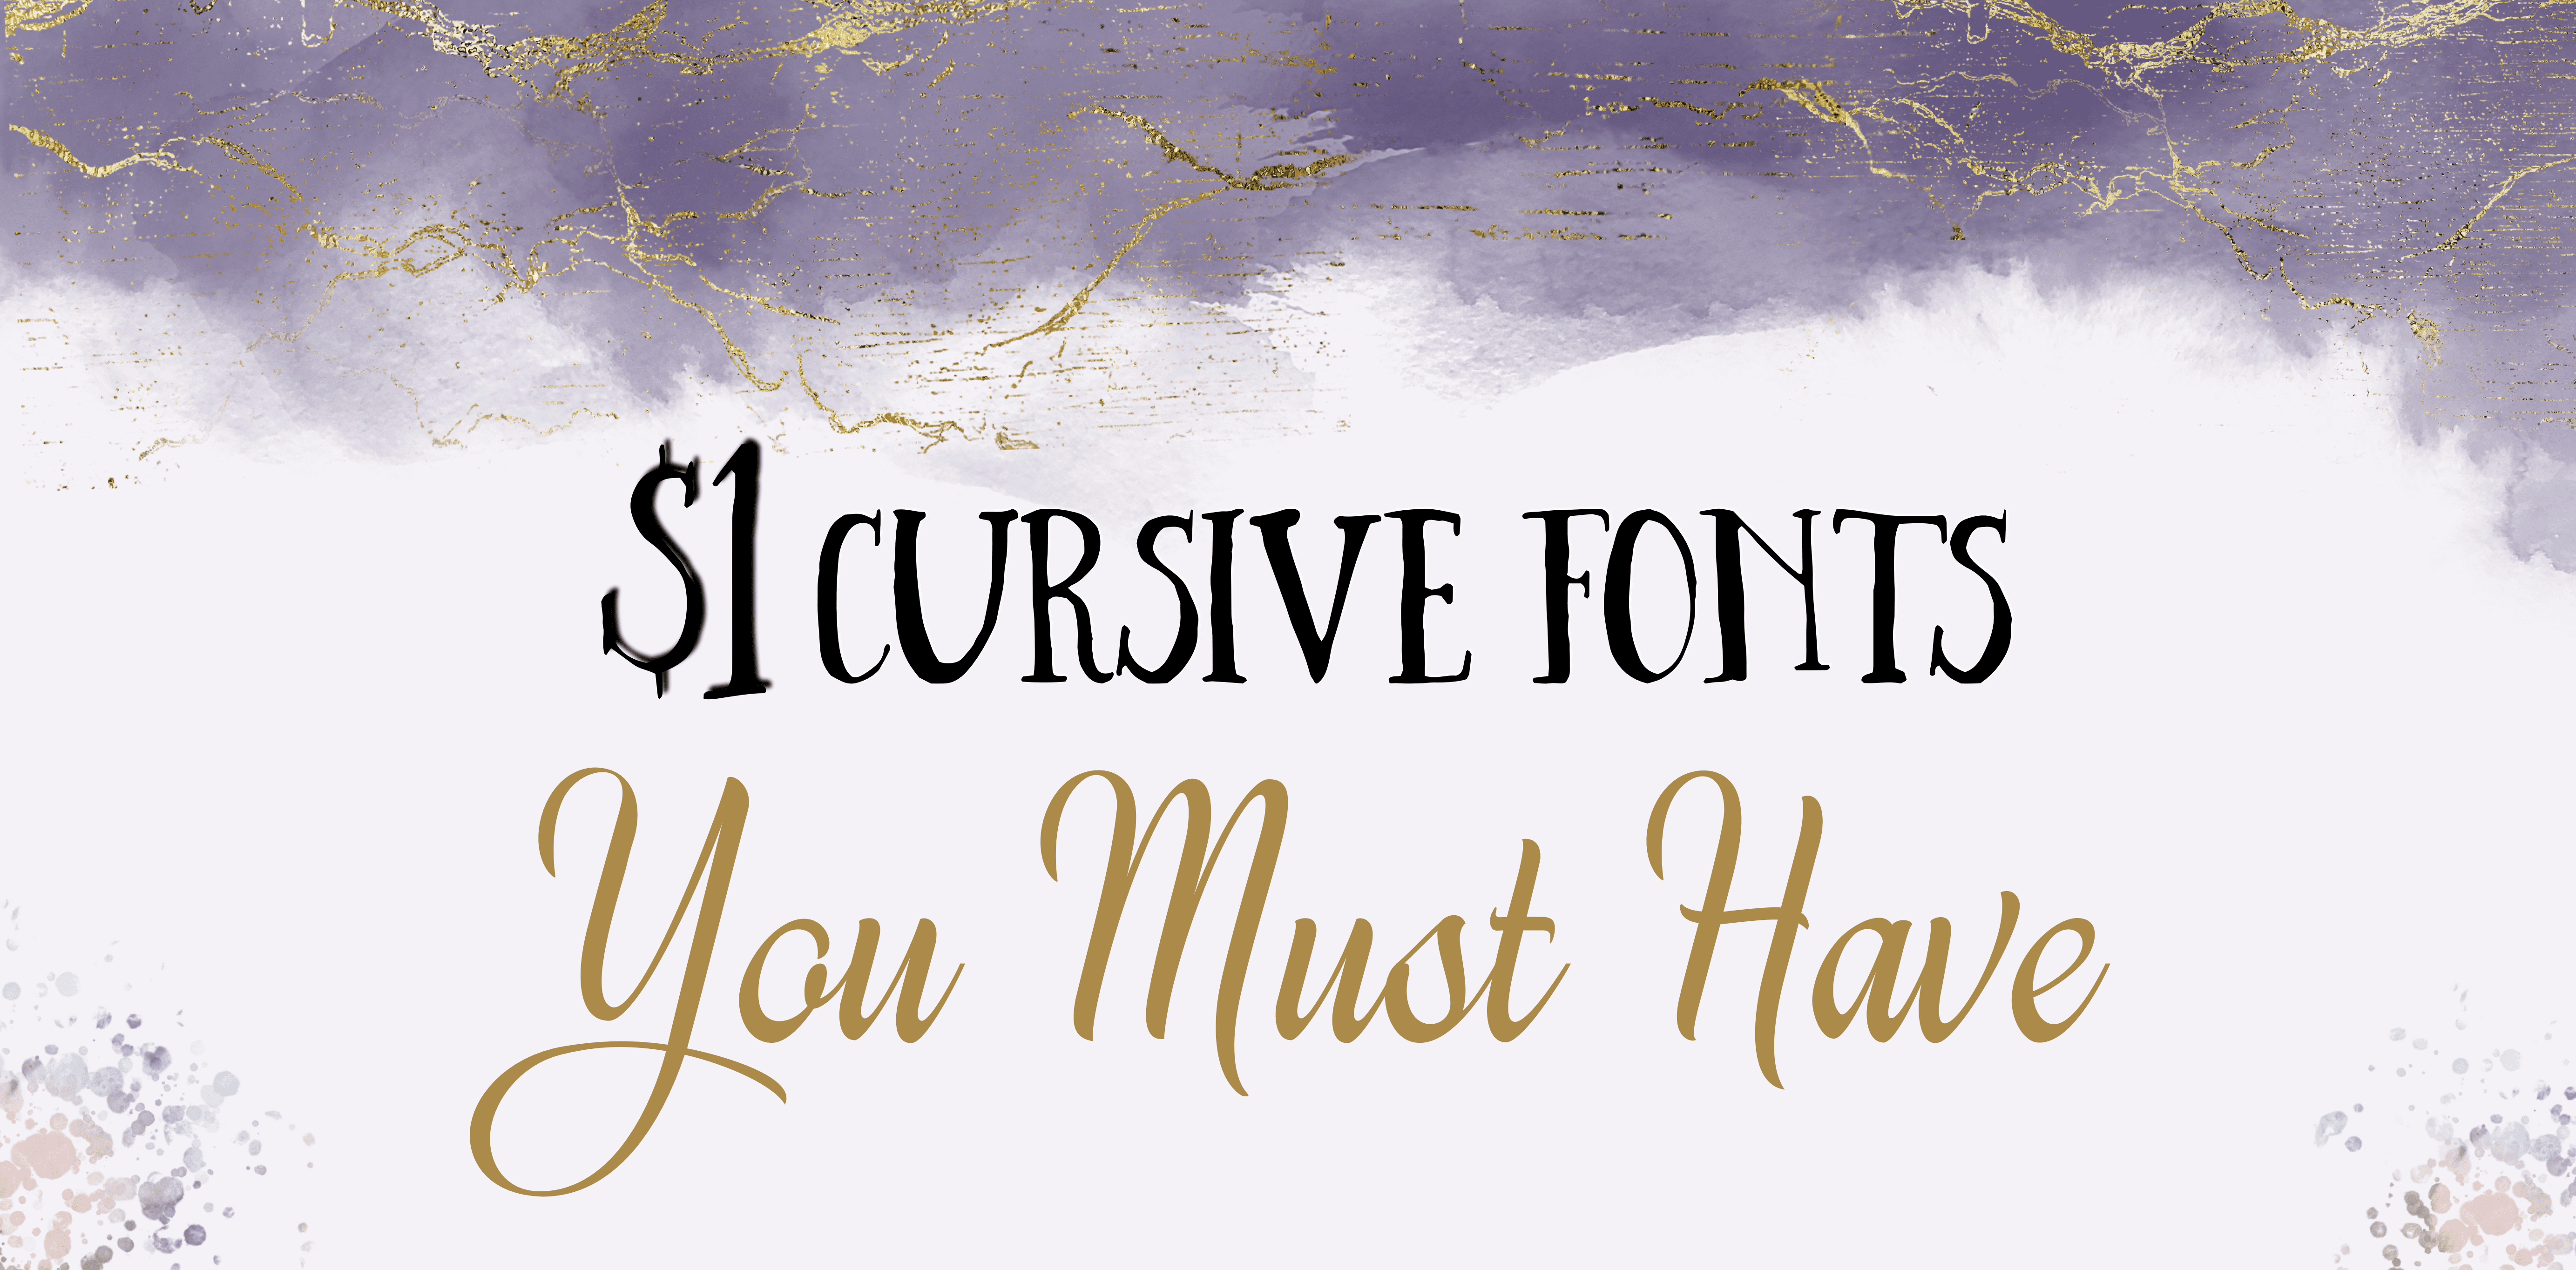 1 Cursive fonts you must have header